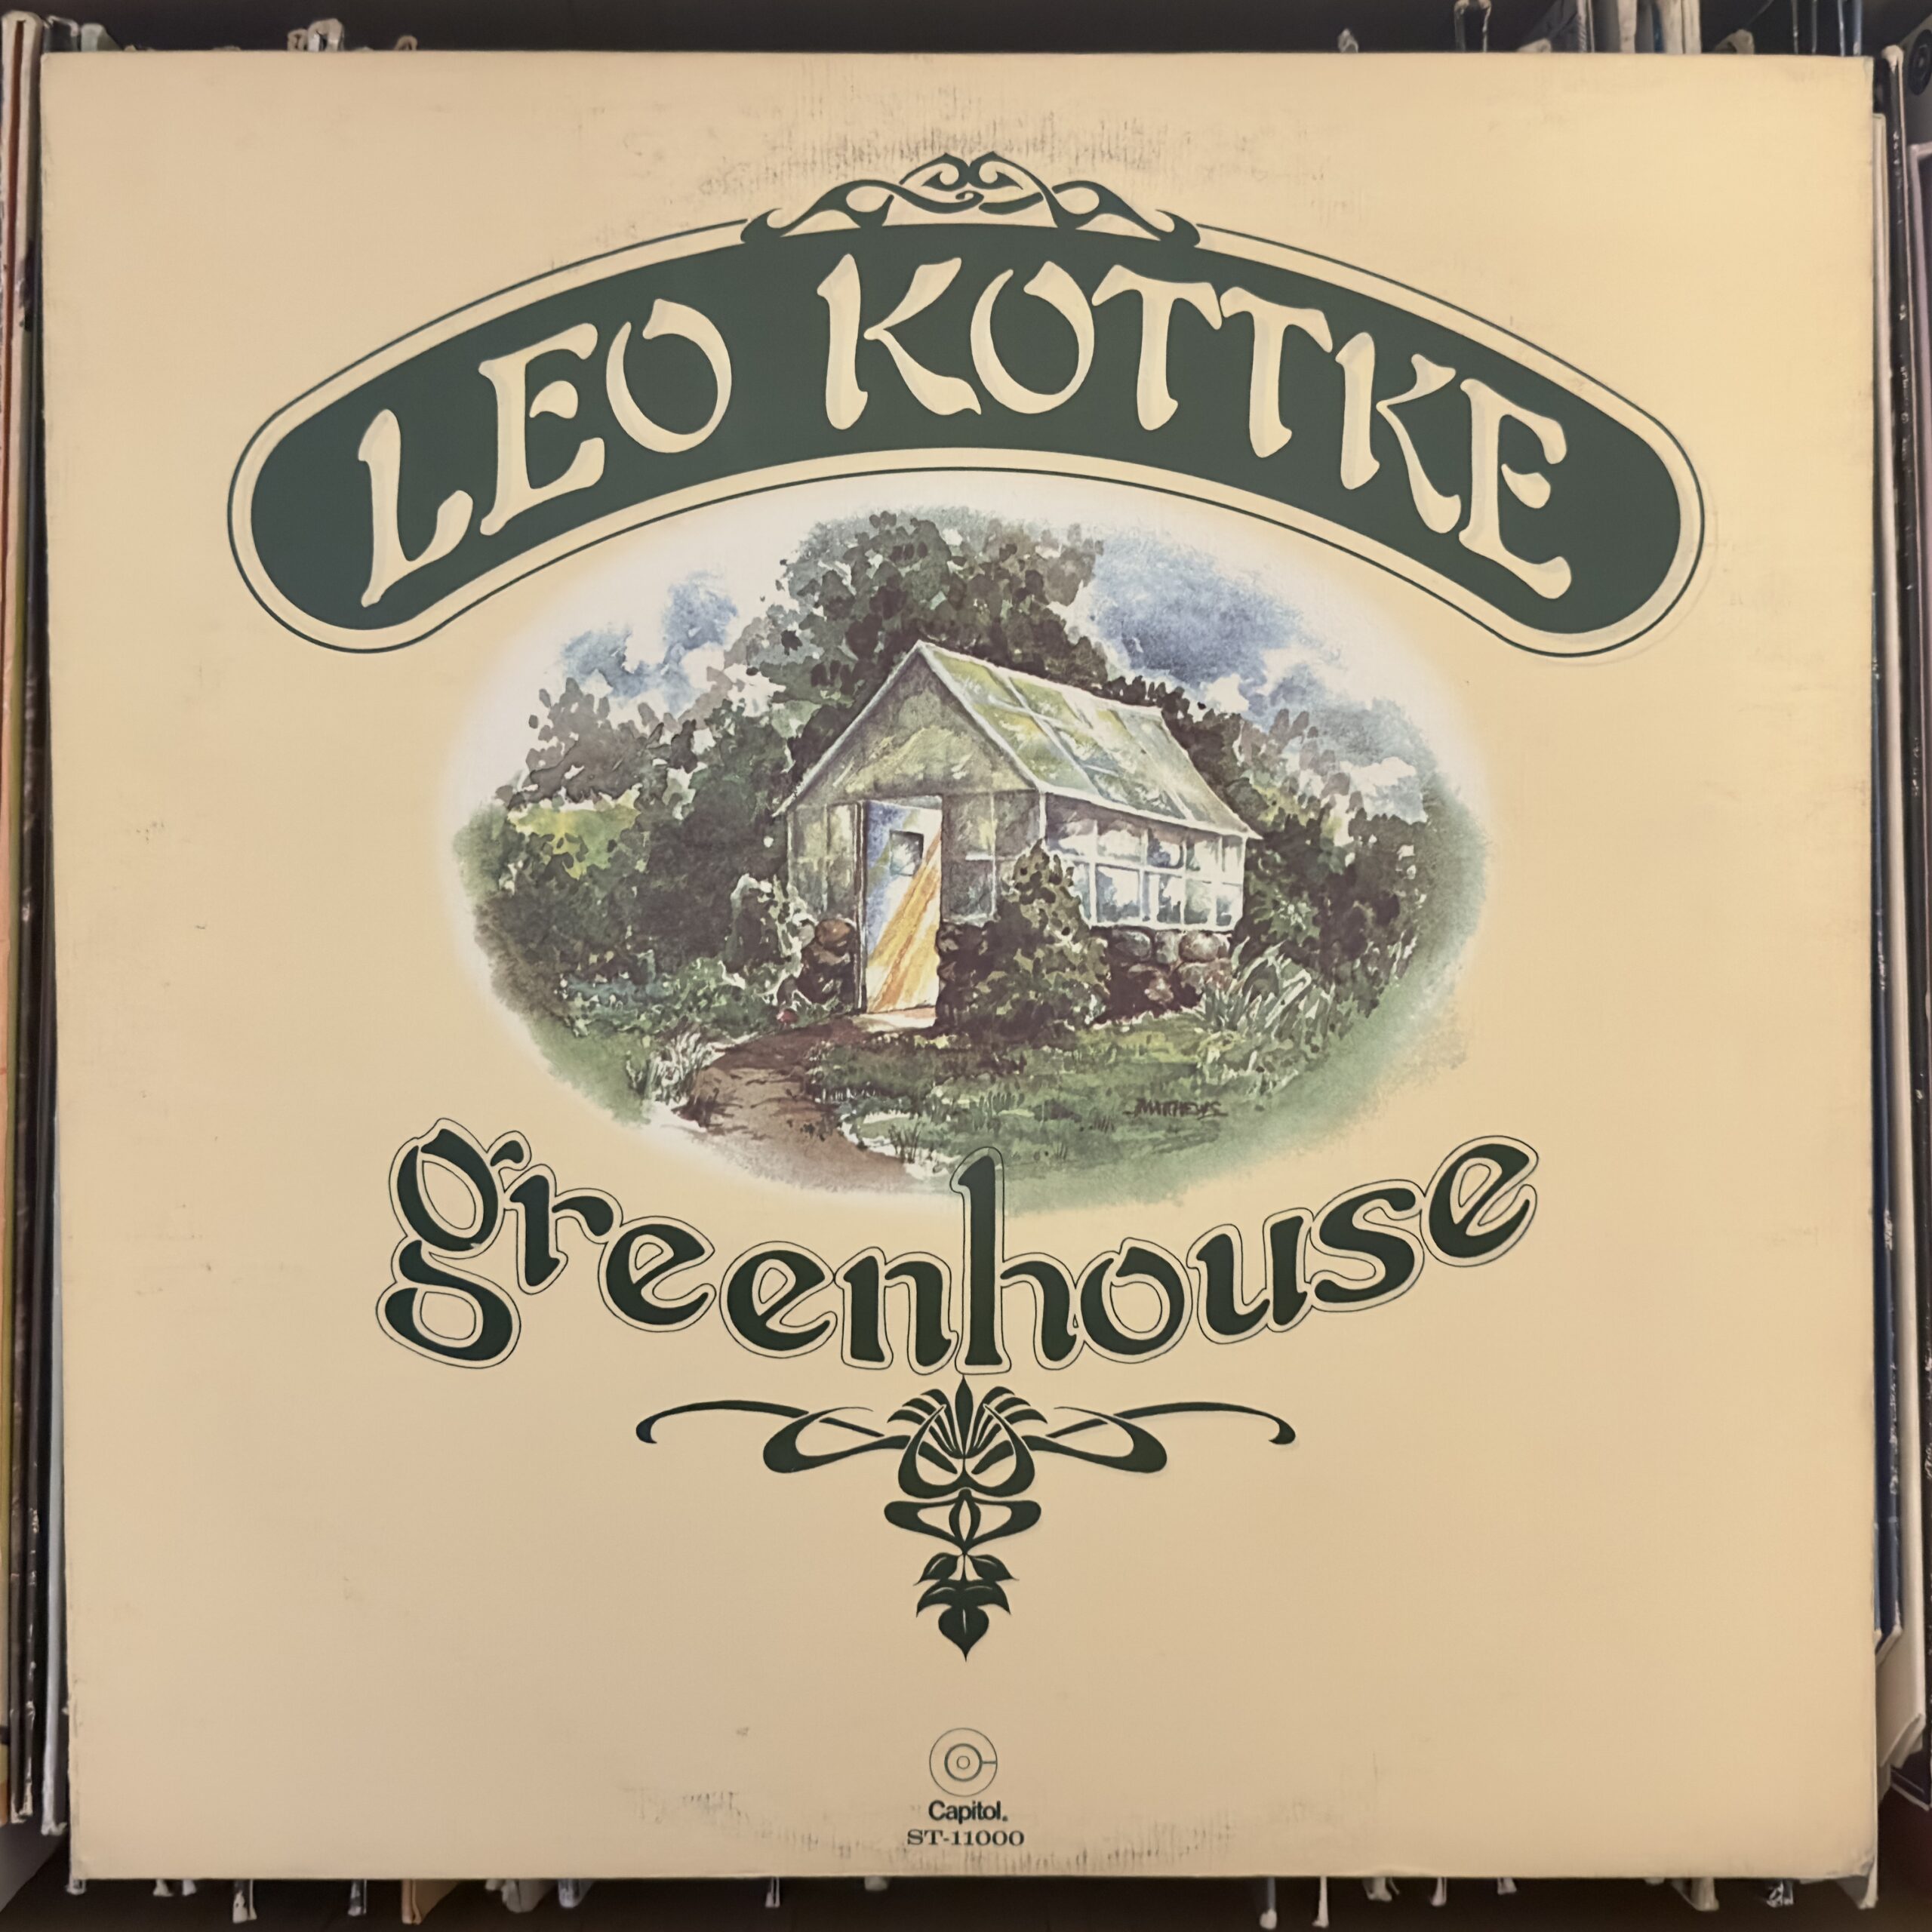 Greenhouse by Leo Kottke